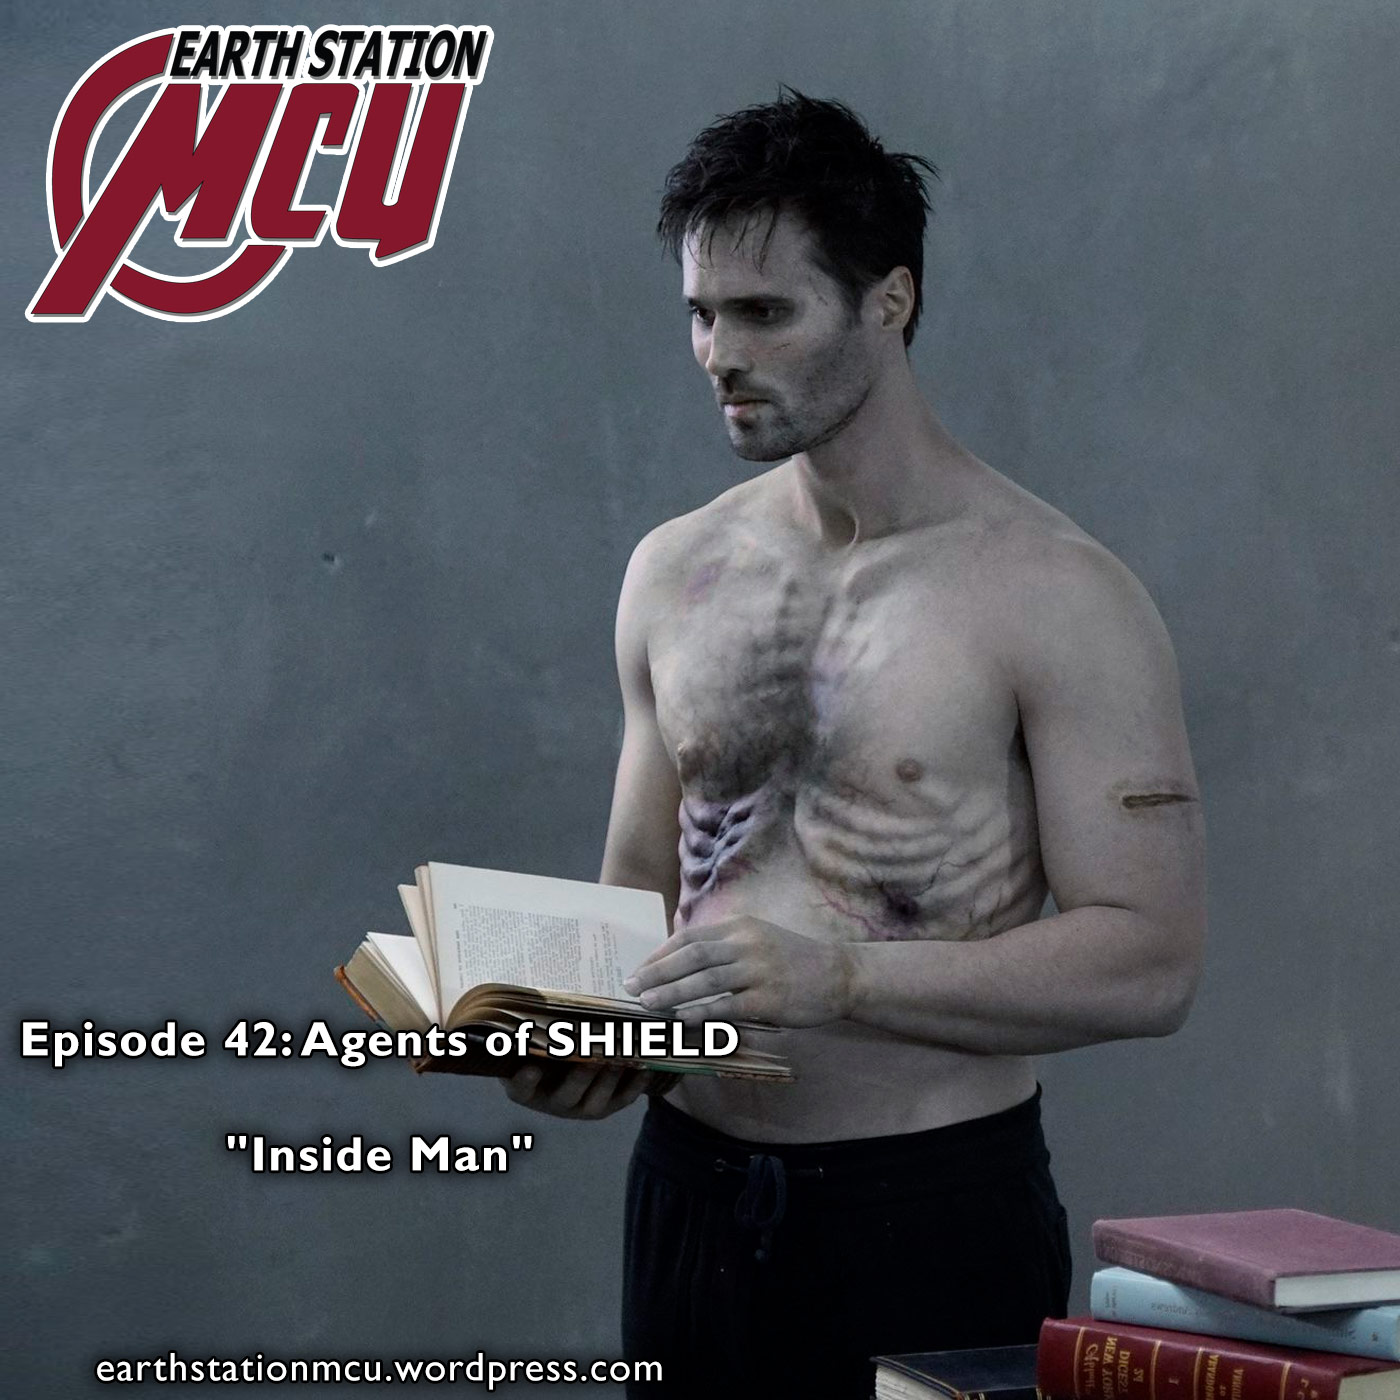 Earth Station MCU: Episode 42 - Agents of SHIELD "Inside Man"